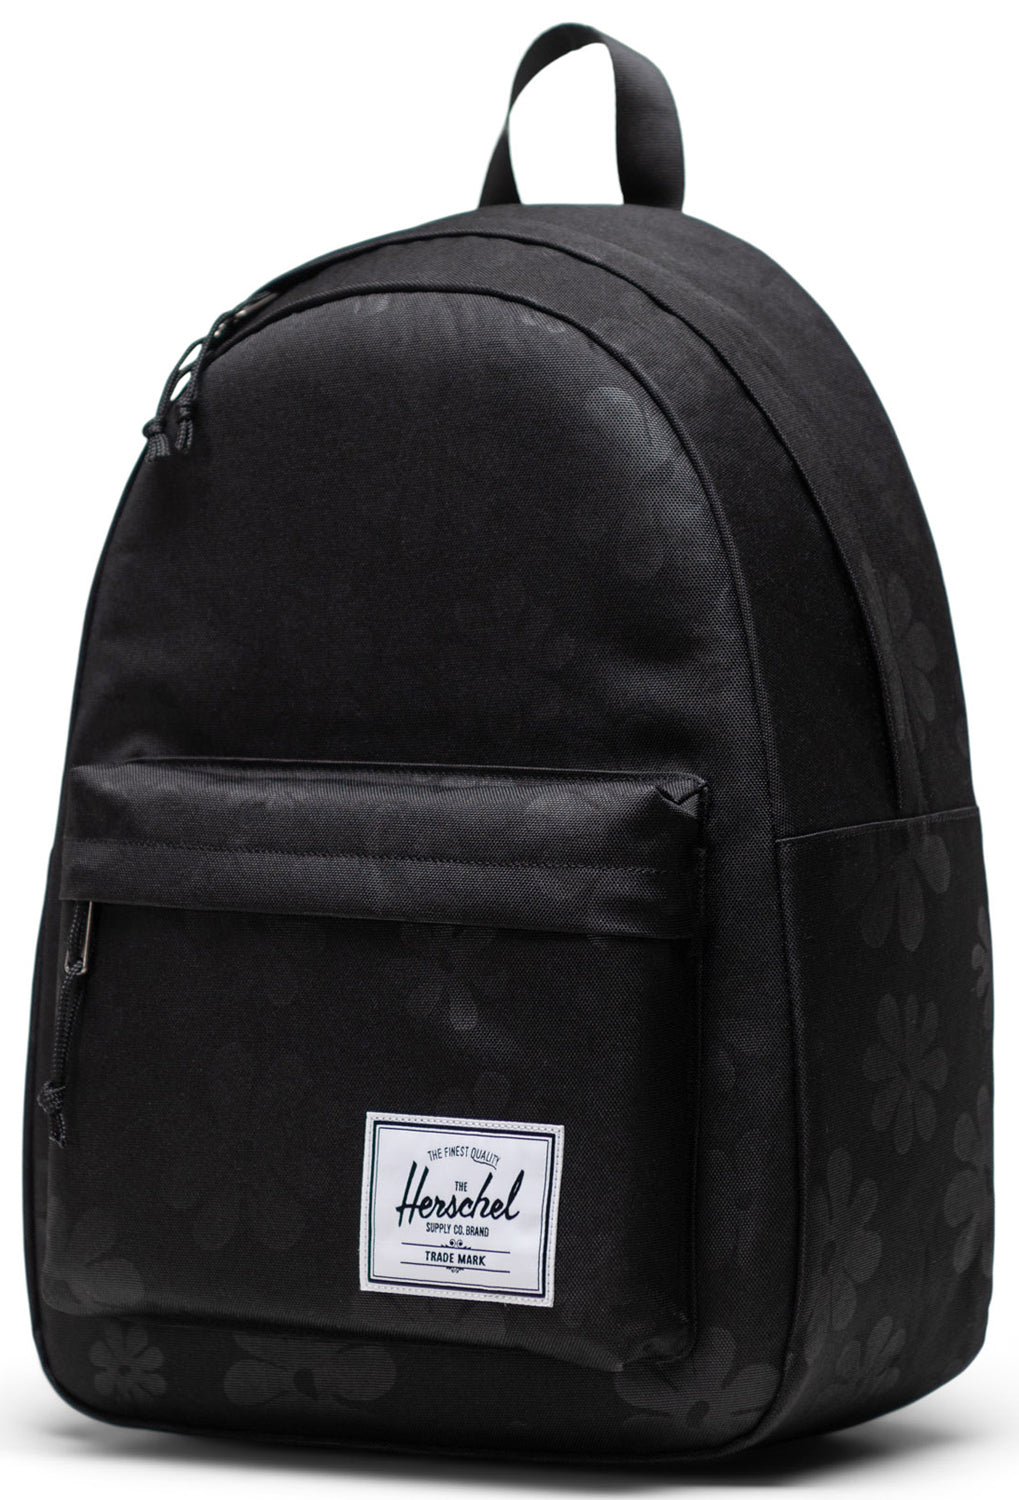 Herschel Classic Backpack - Black Floral Sun